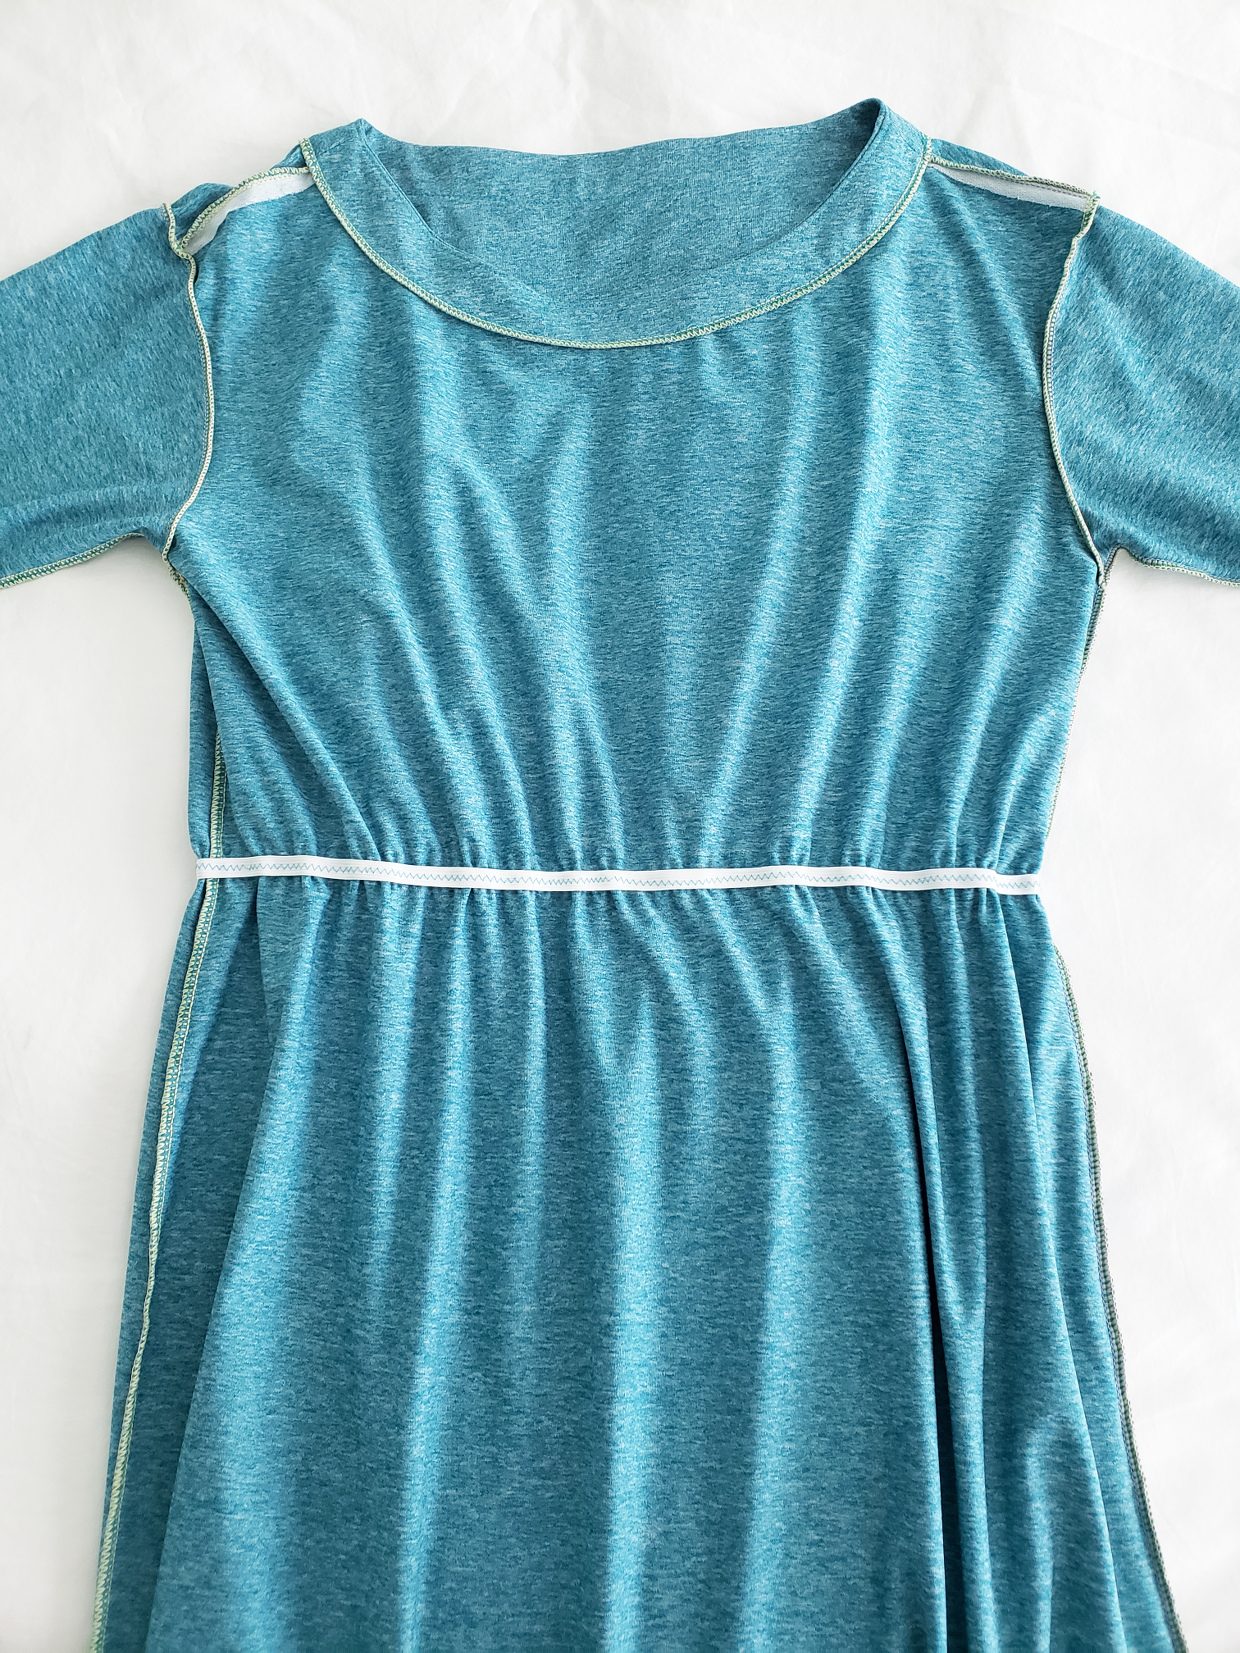 Adding Elastic to the Waist of a T-Shirt Dress, Blog